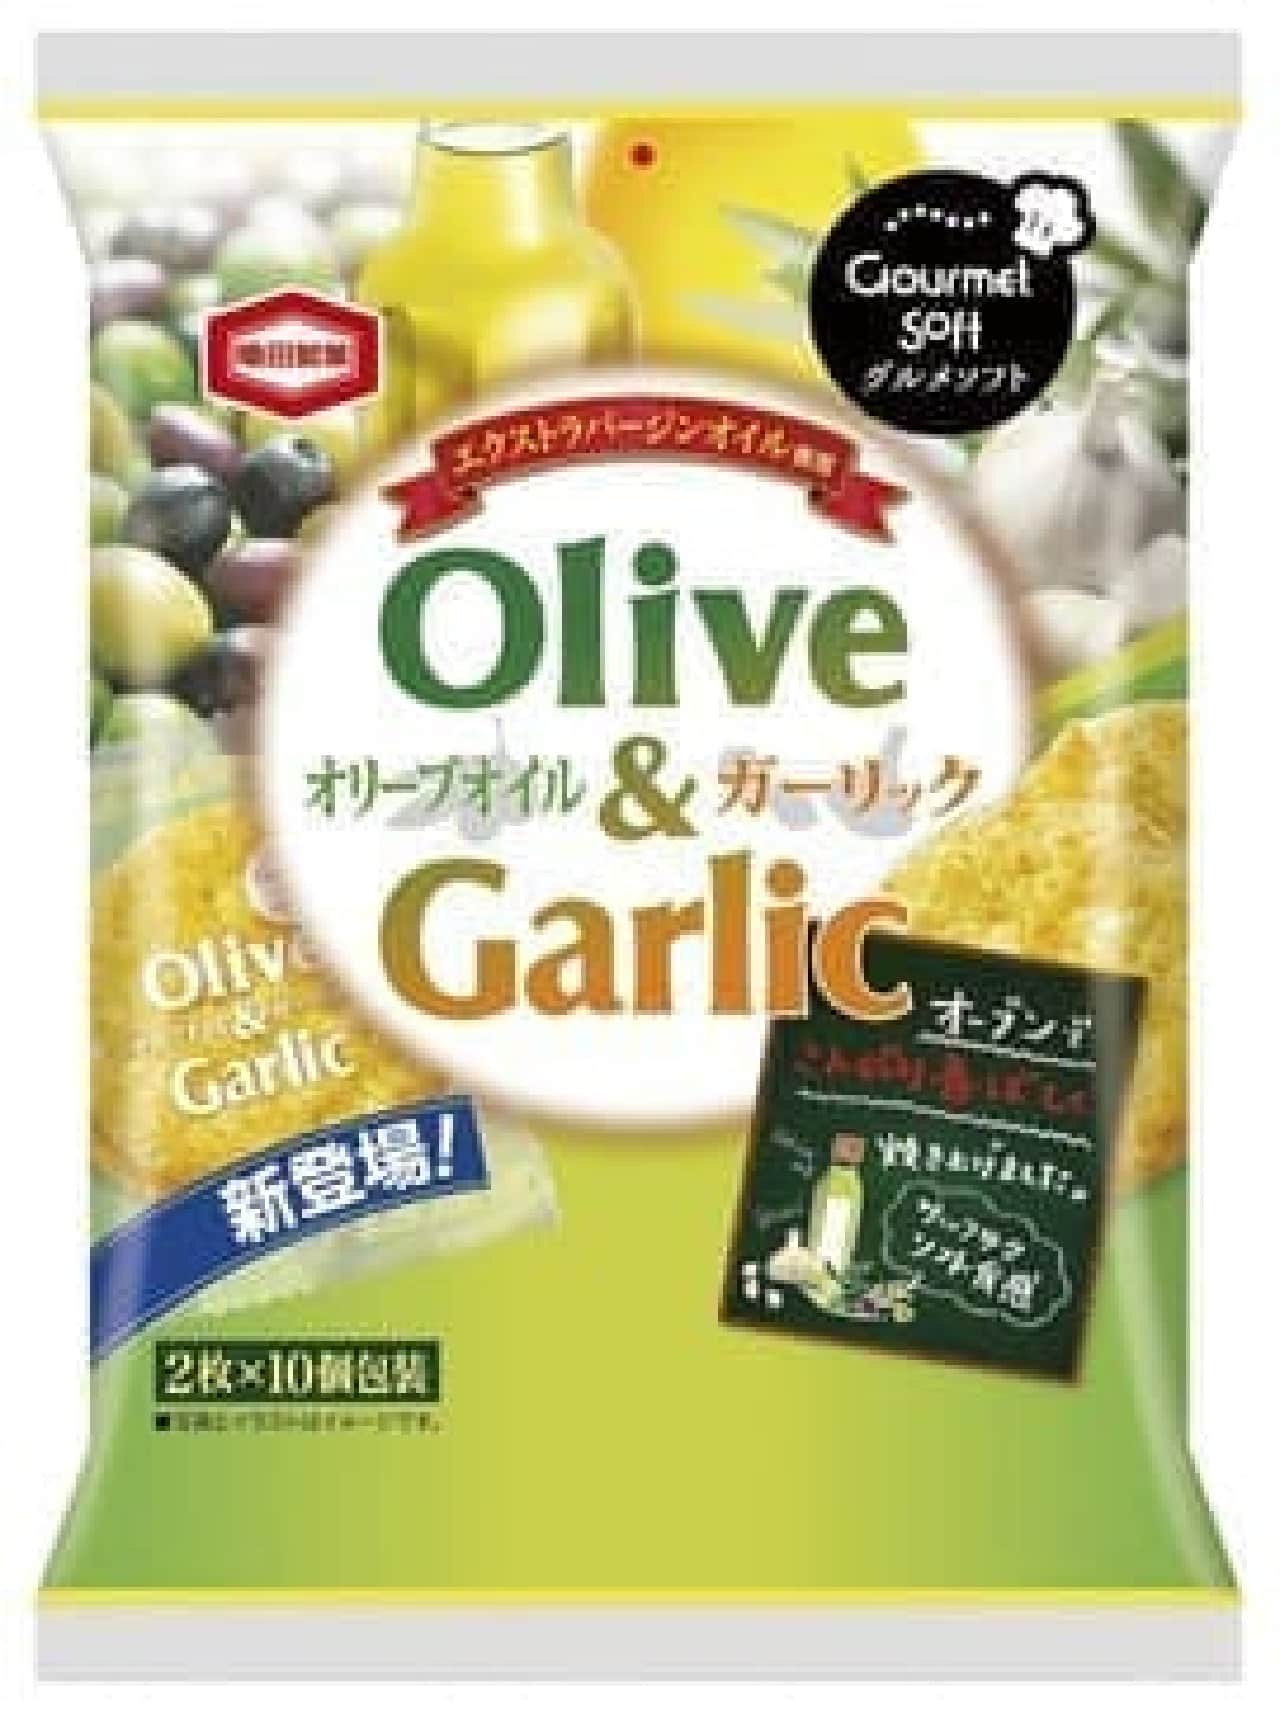 "Gourmet Soft Olive Oil & Garlic"